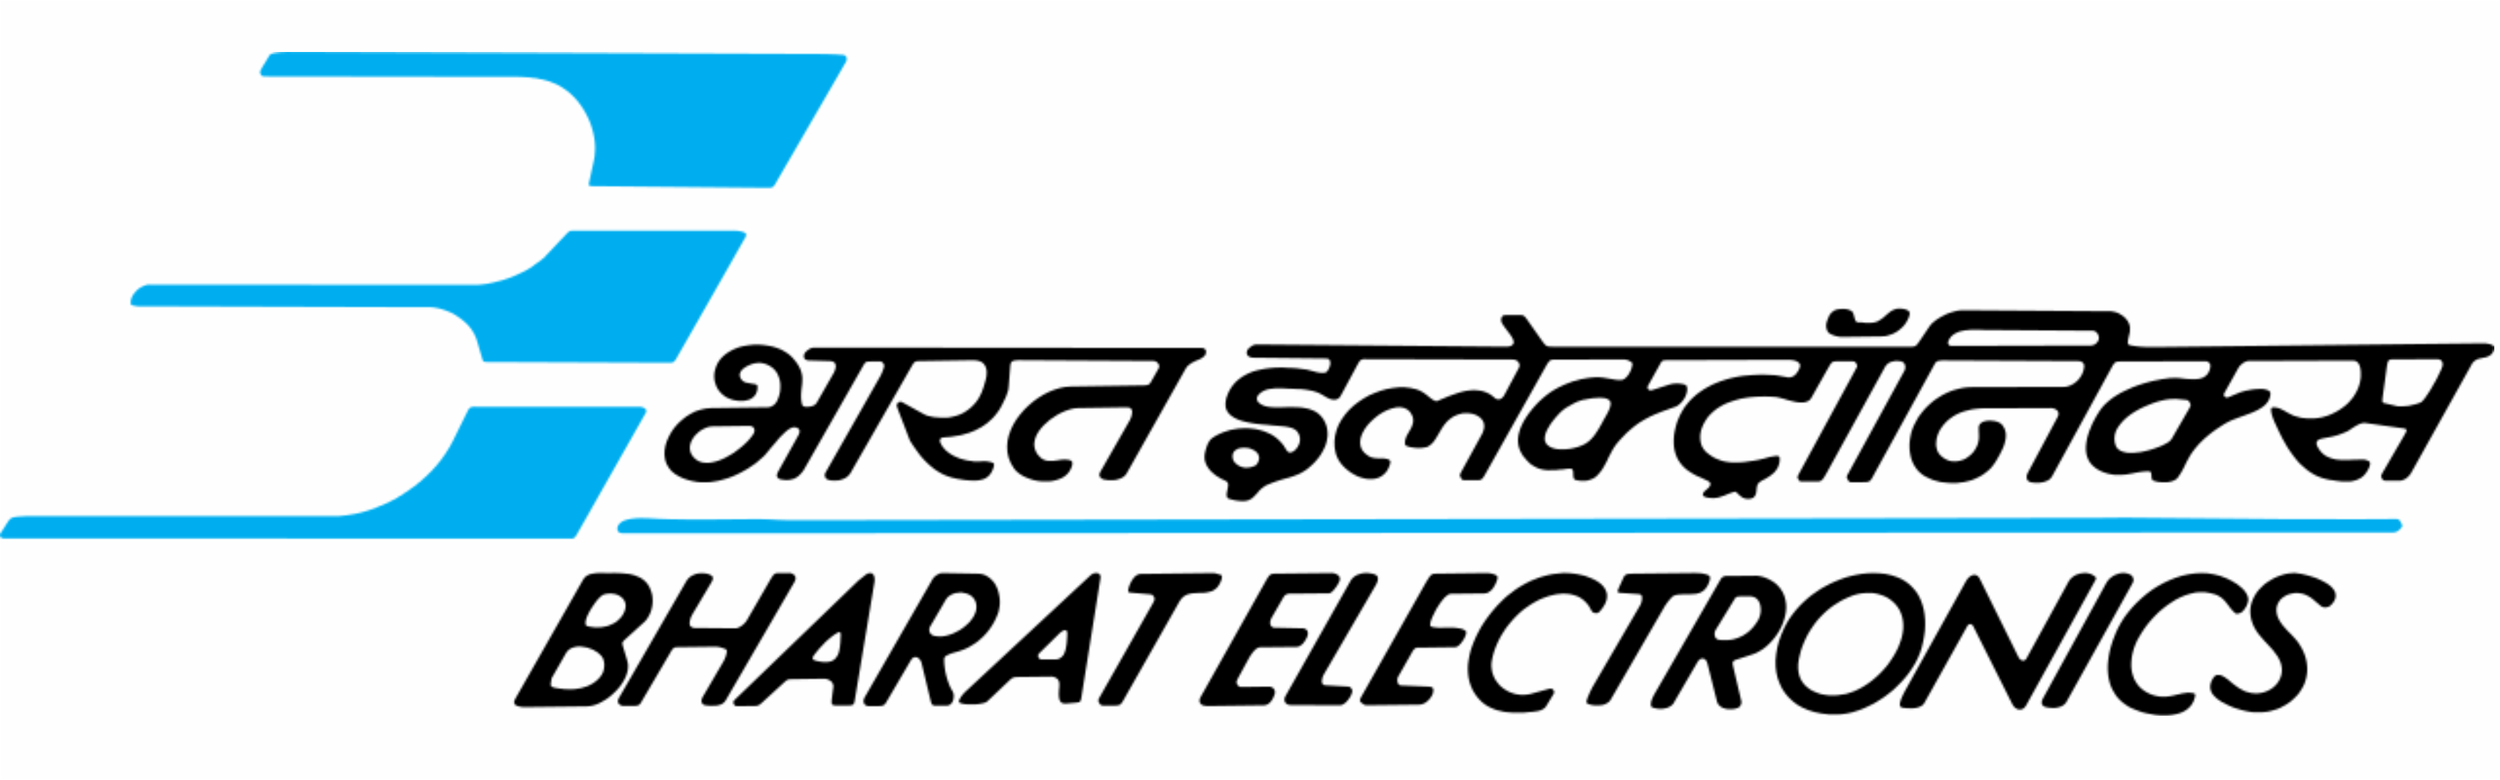 Bharat Electronics.png